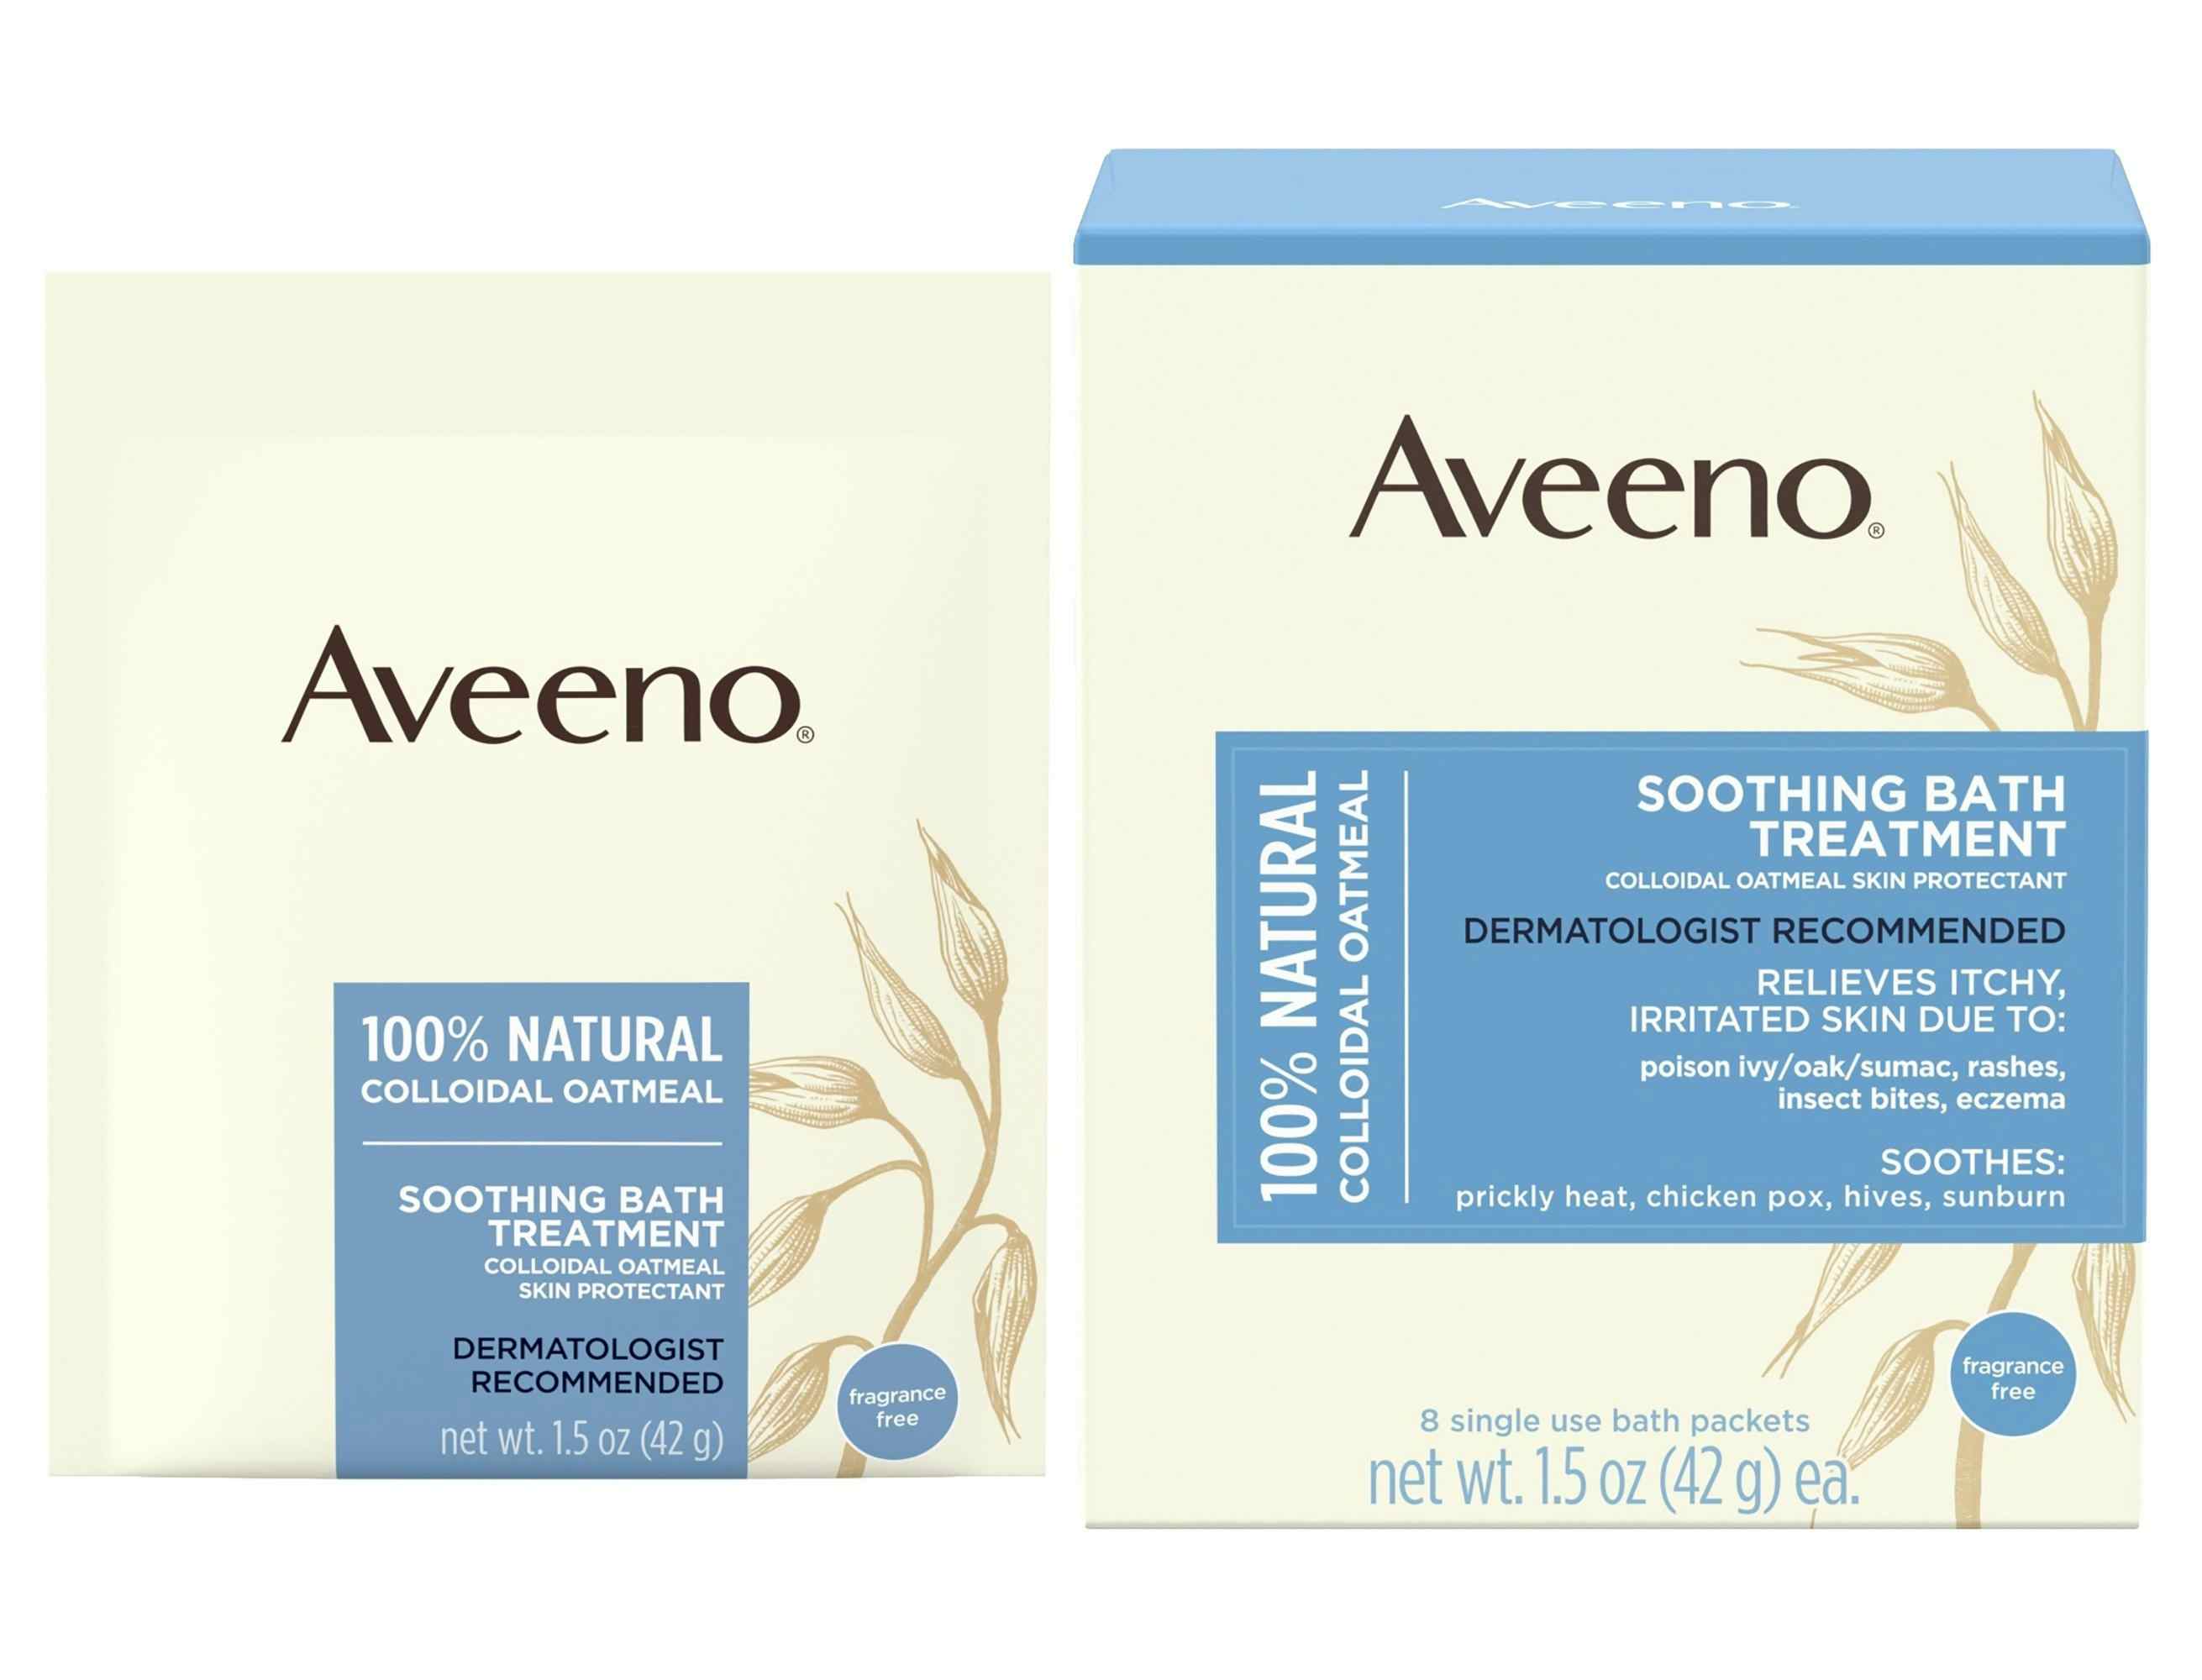 Aveeno Soothing Oatmeal Bath Treatment, 1.5 oz. Packet, 10381370036408, Box of 8